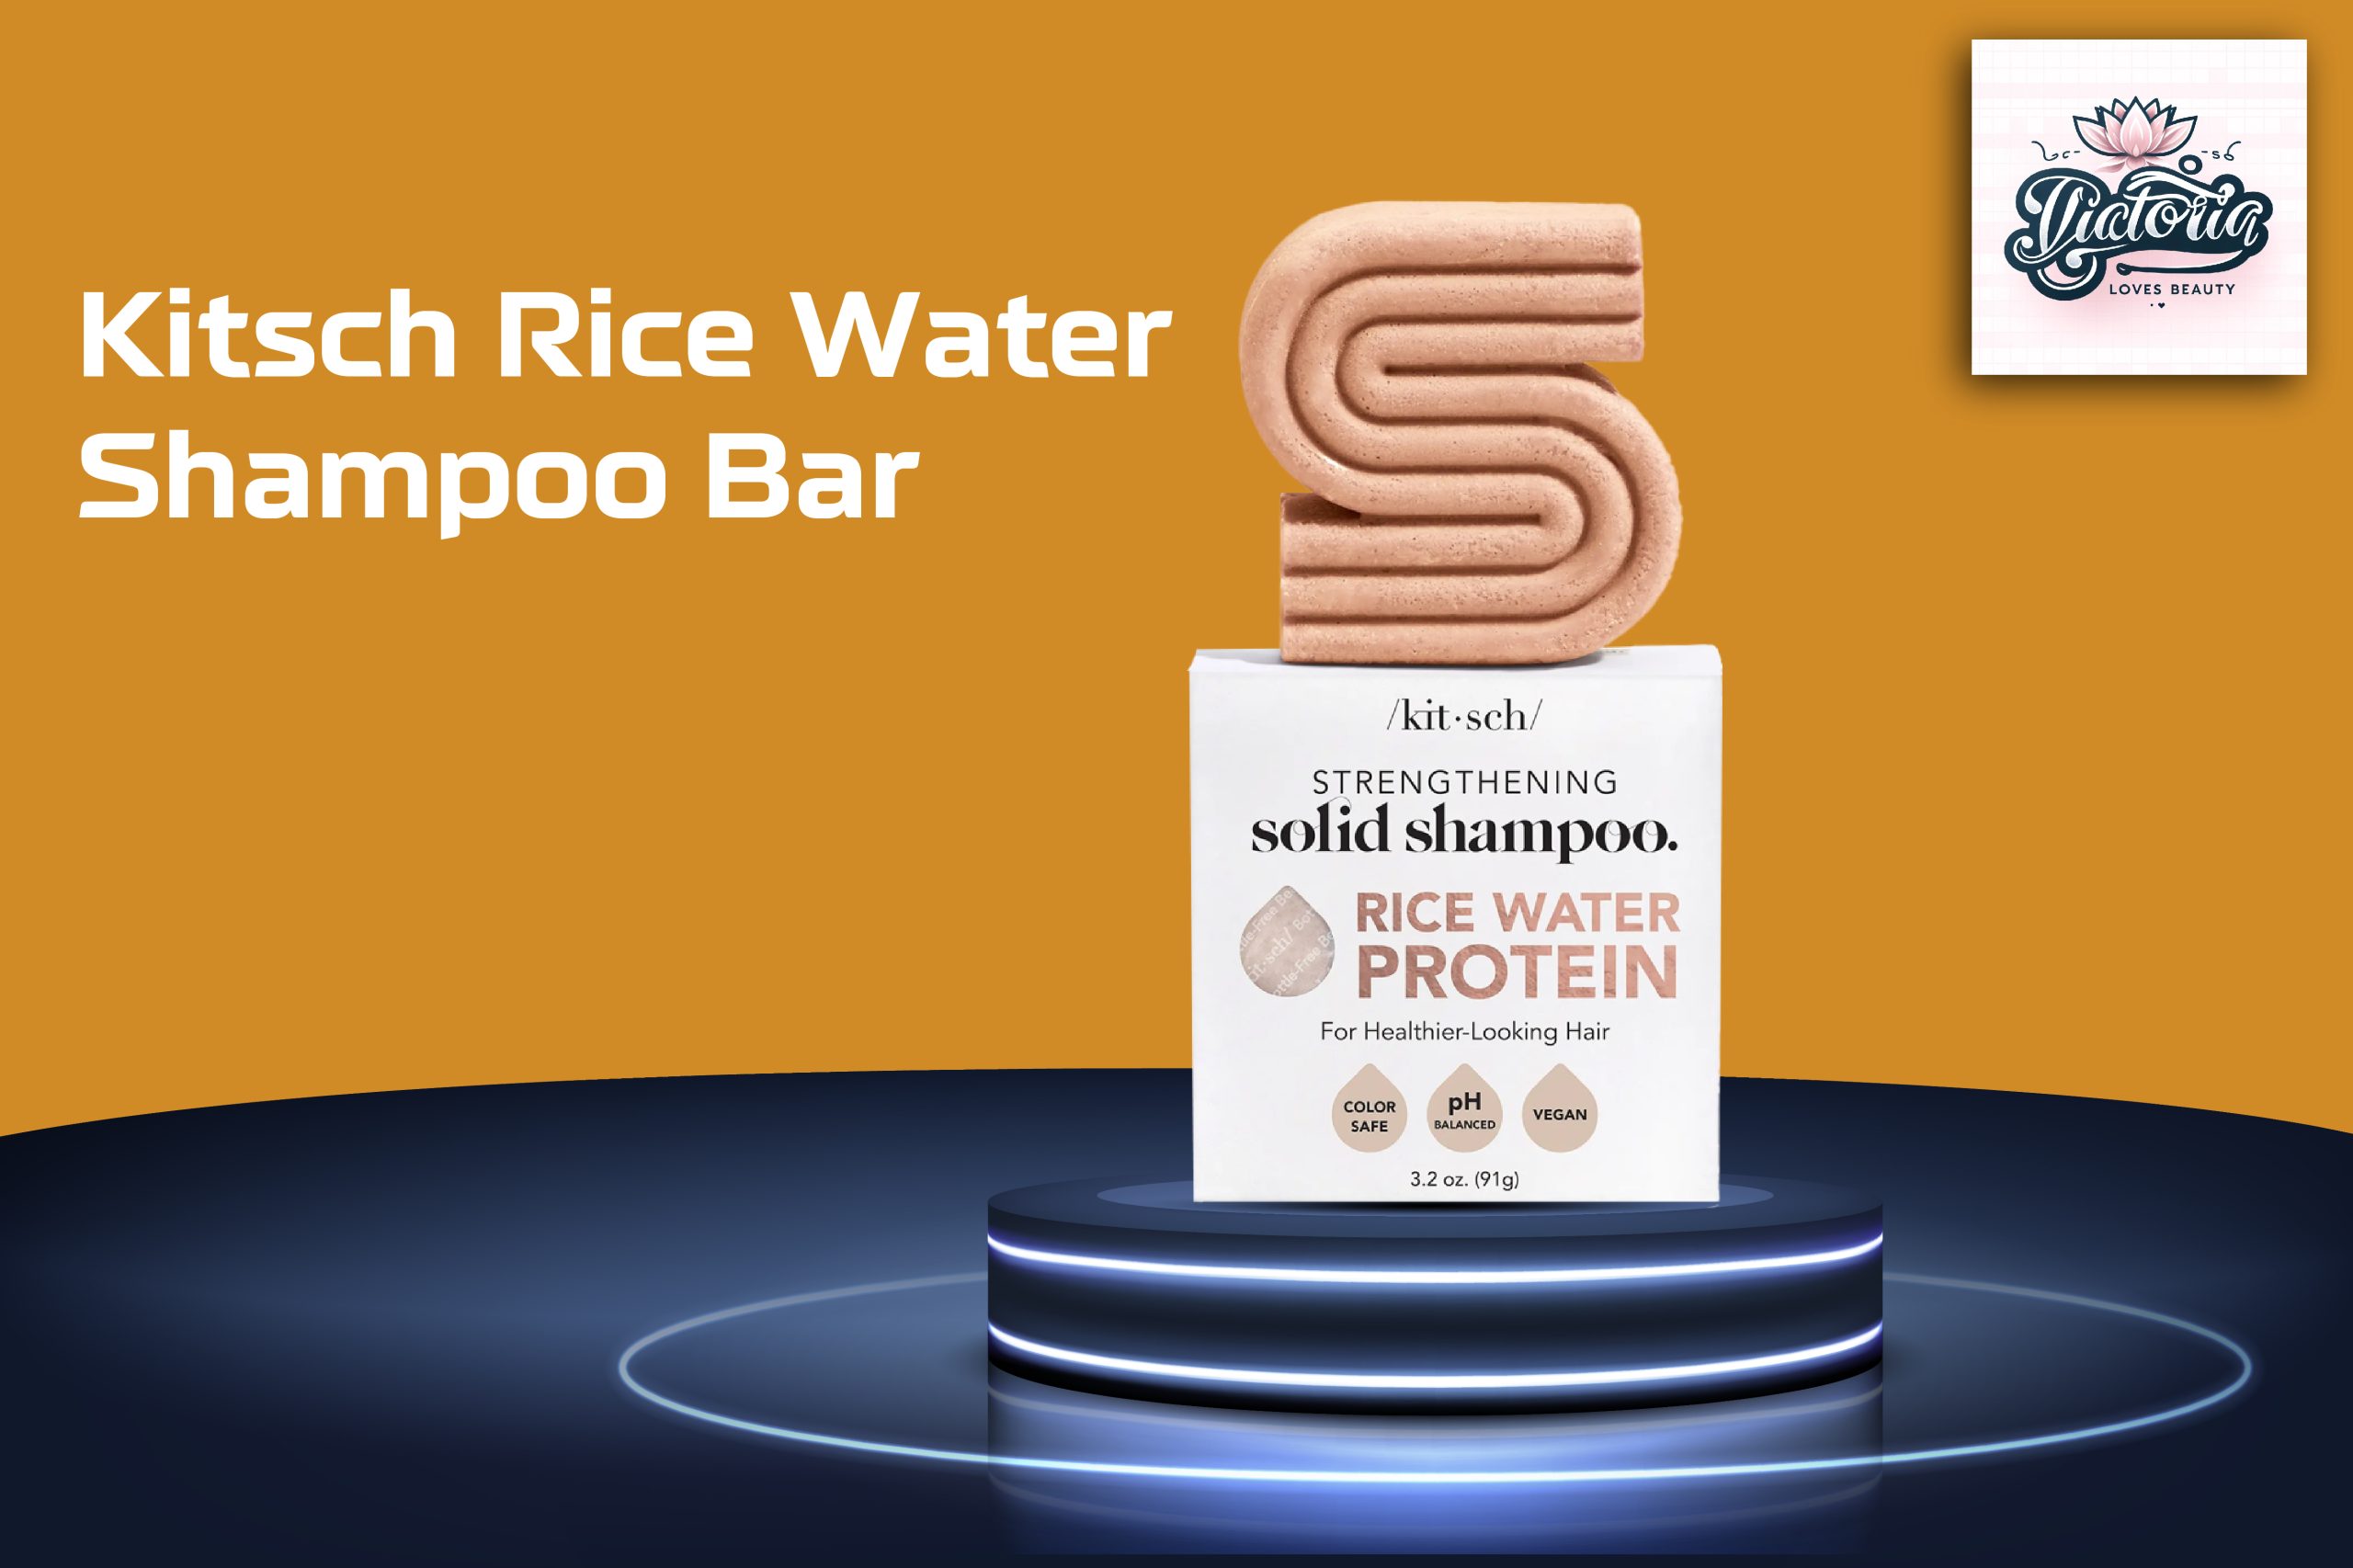 Kitsch Rice Water Shampoo Bar Review